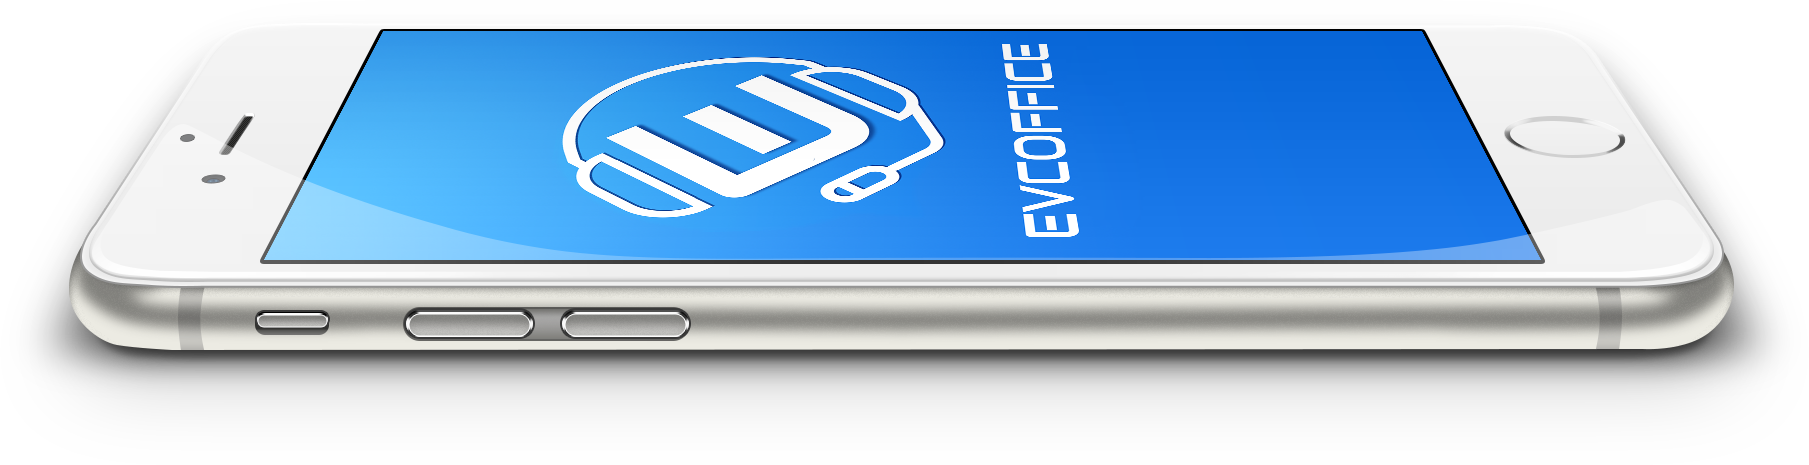  evcoffice app on iphone